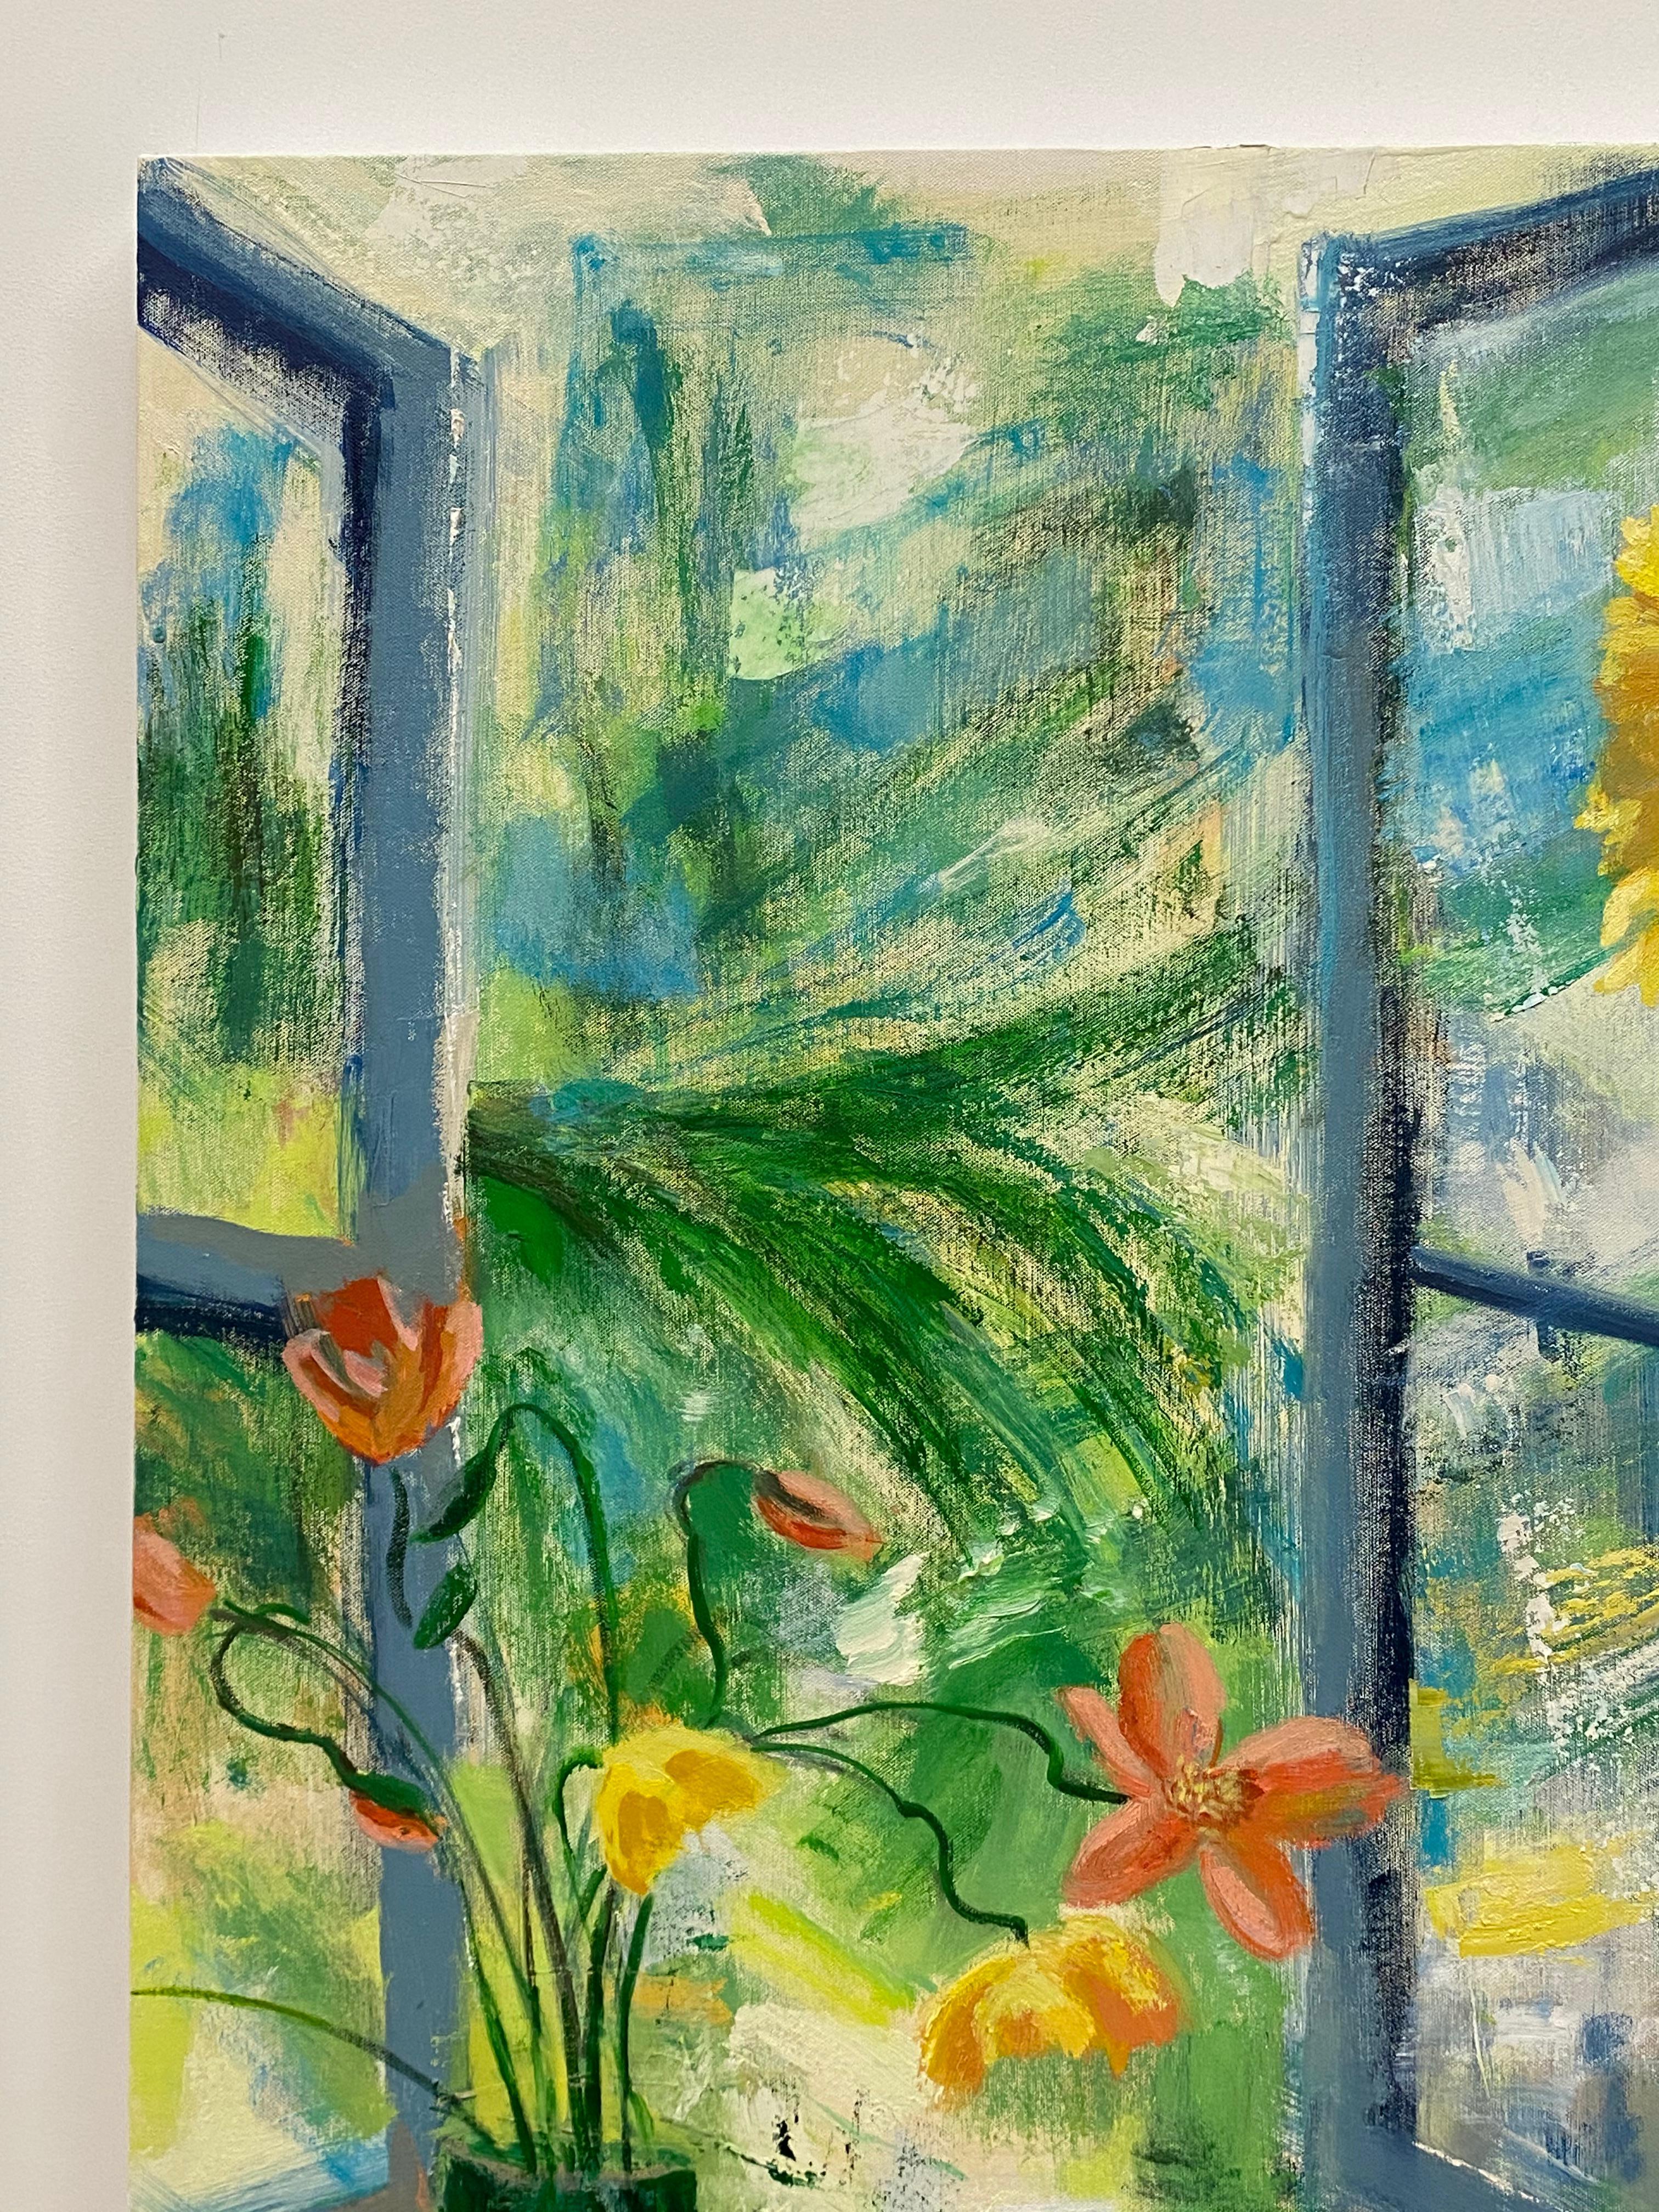 Arezzo Matina, Interior Painting, Botanical Still Life, Blue, Yellow Sunflowers For Sale 2